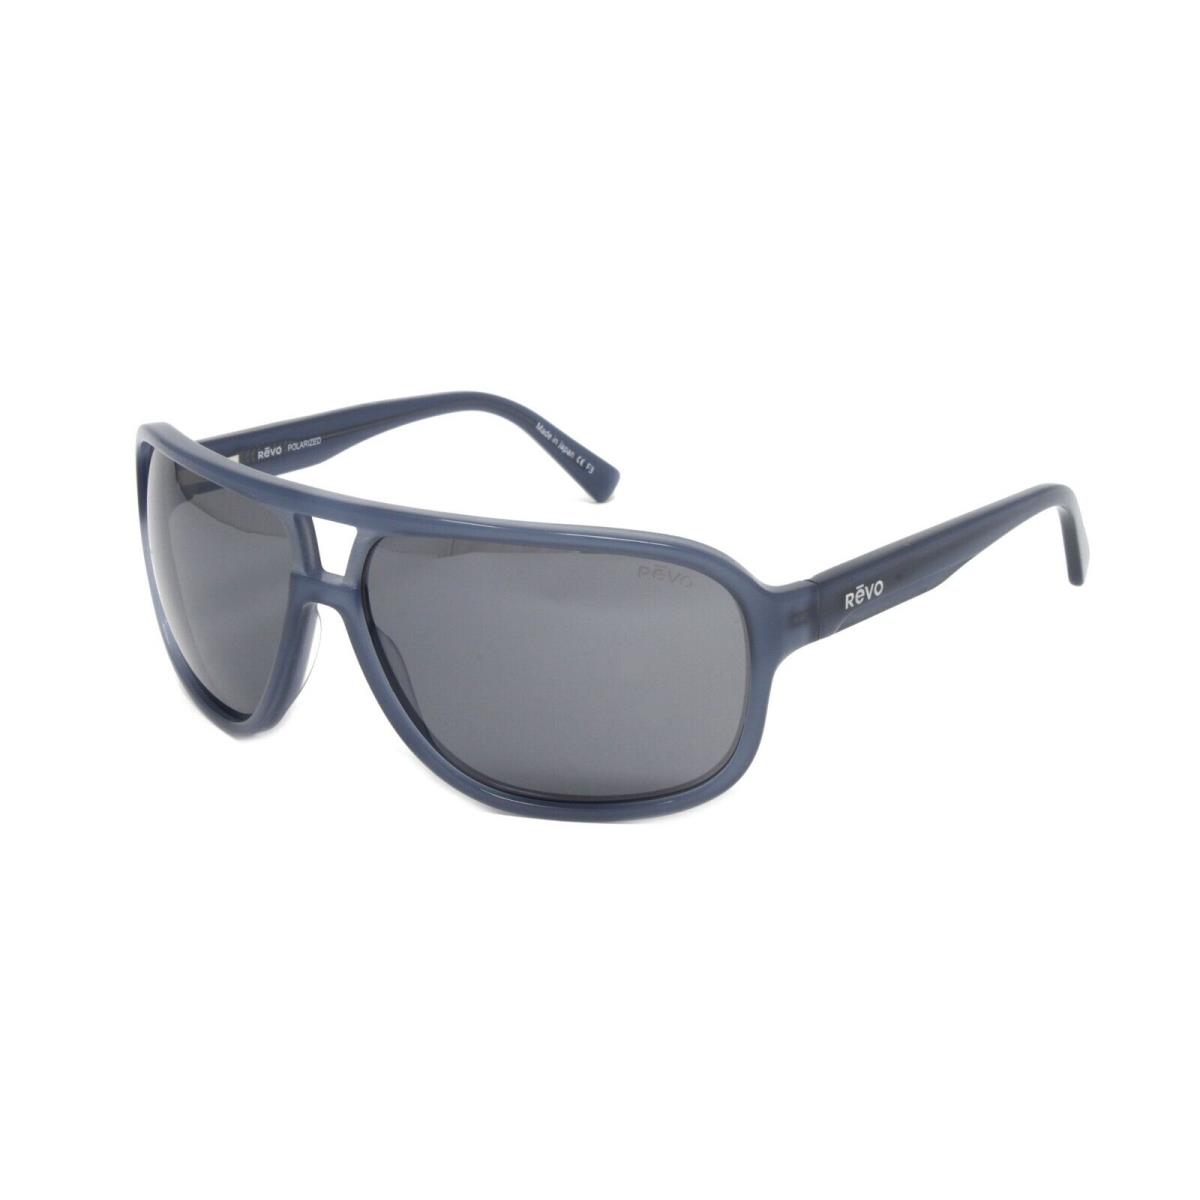 Revo Sunglasses Hank L RE1145ECO 00GY Grey Graphite Polarized Lens 62mm - Frame: Gray, Lens: Gray